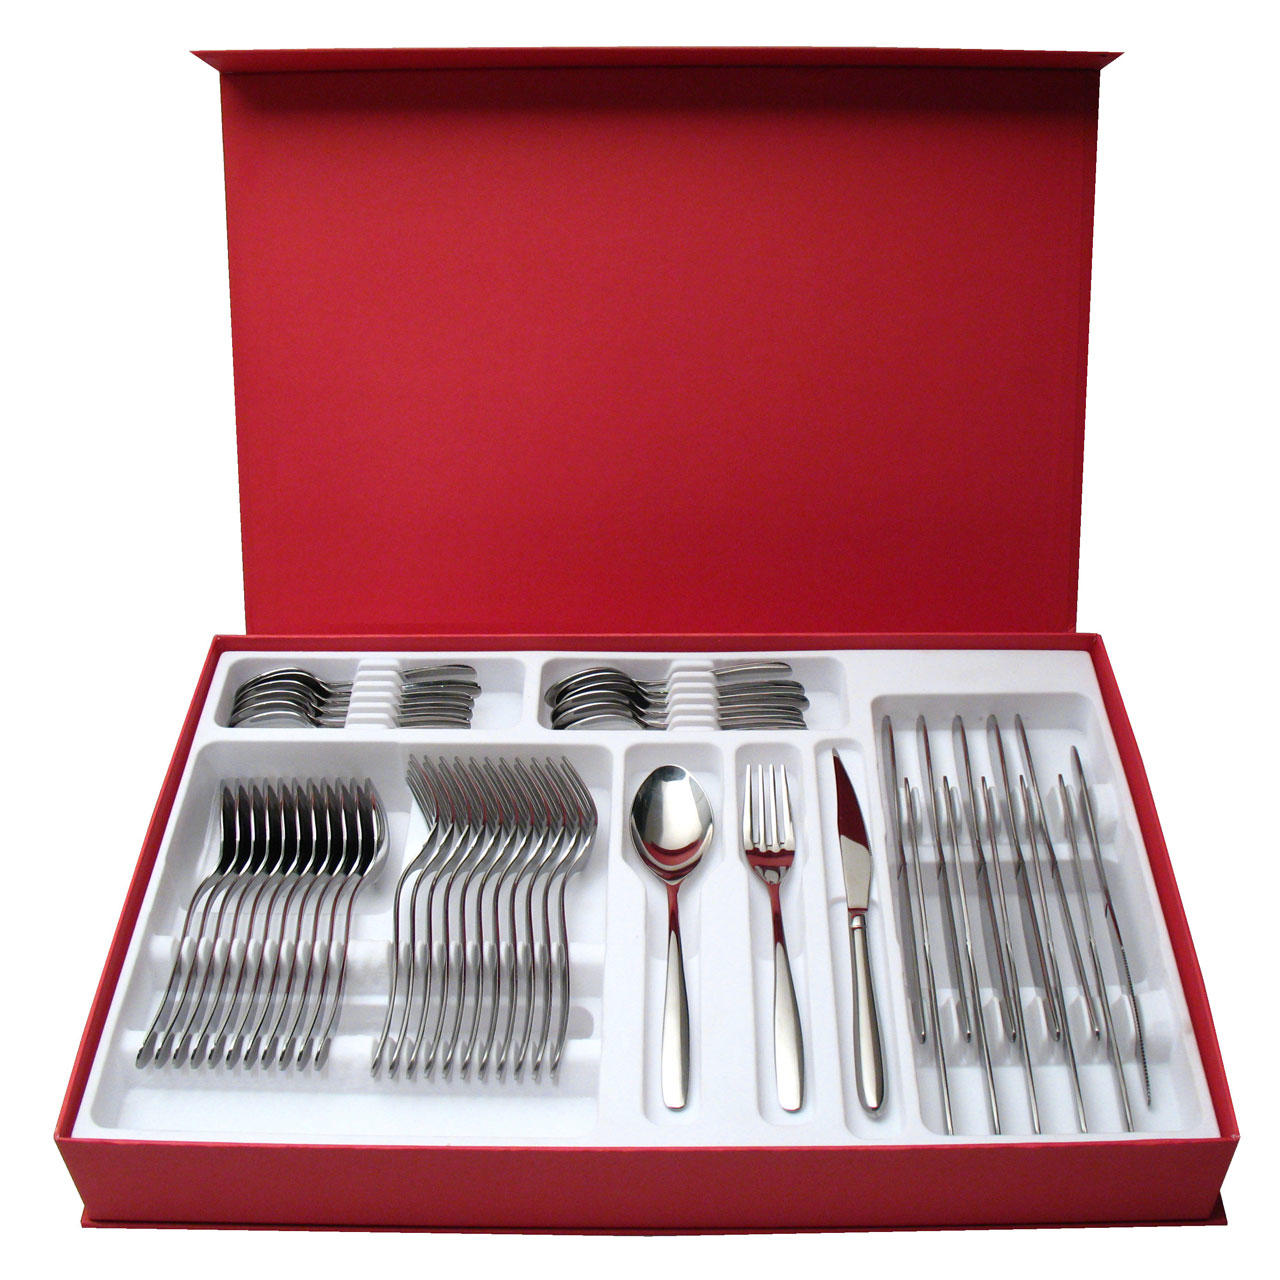 66113047 48 pcs. cutlery set Design Case 